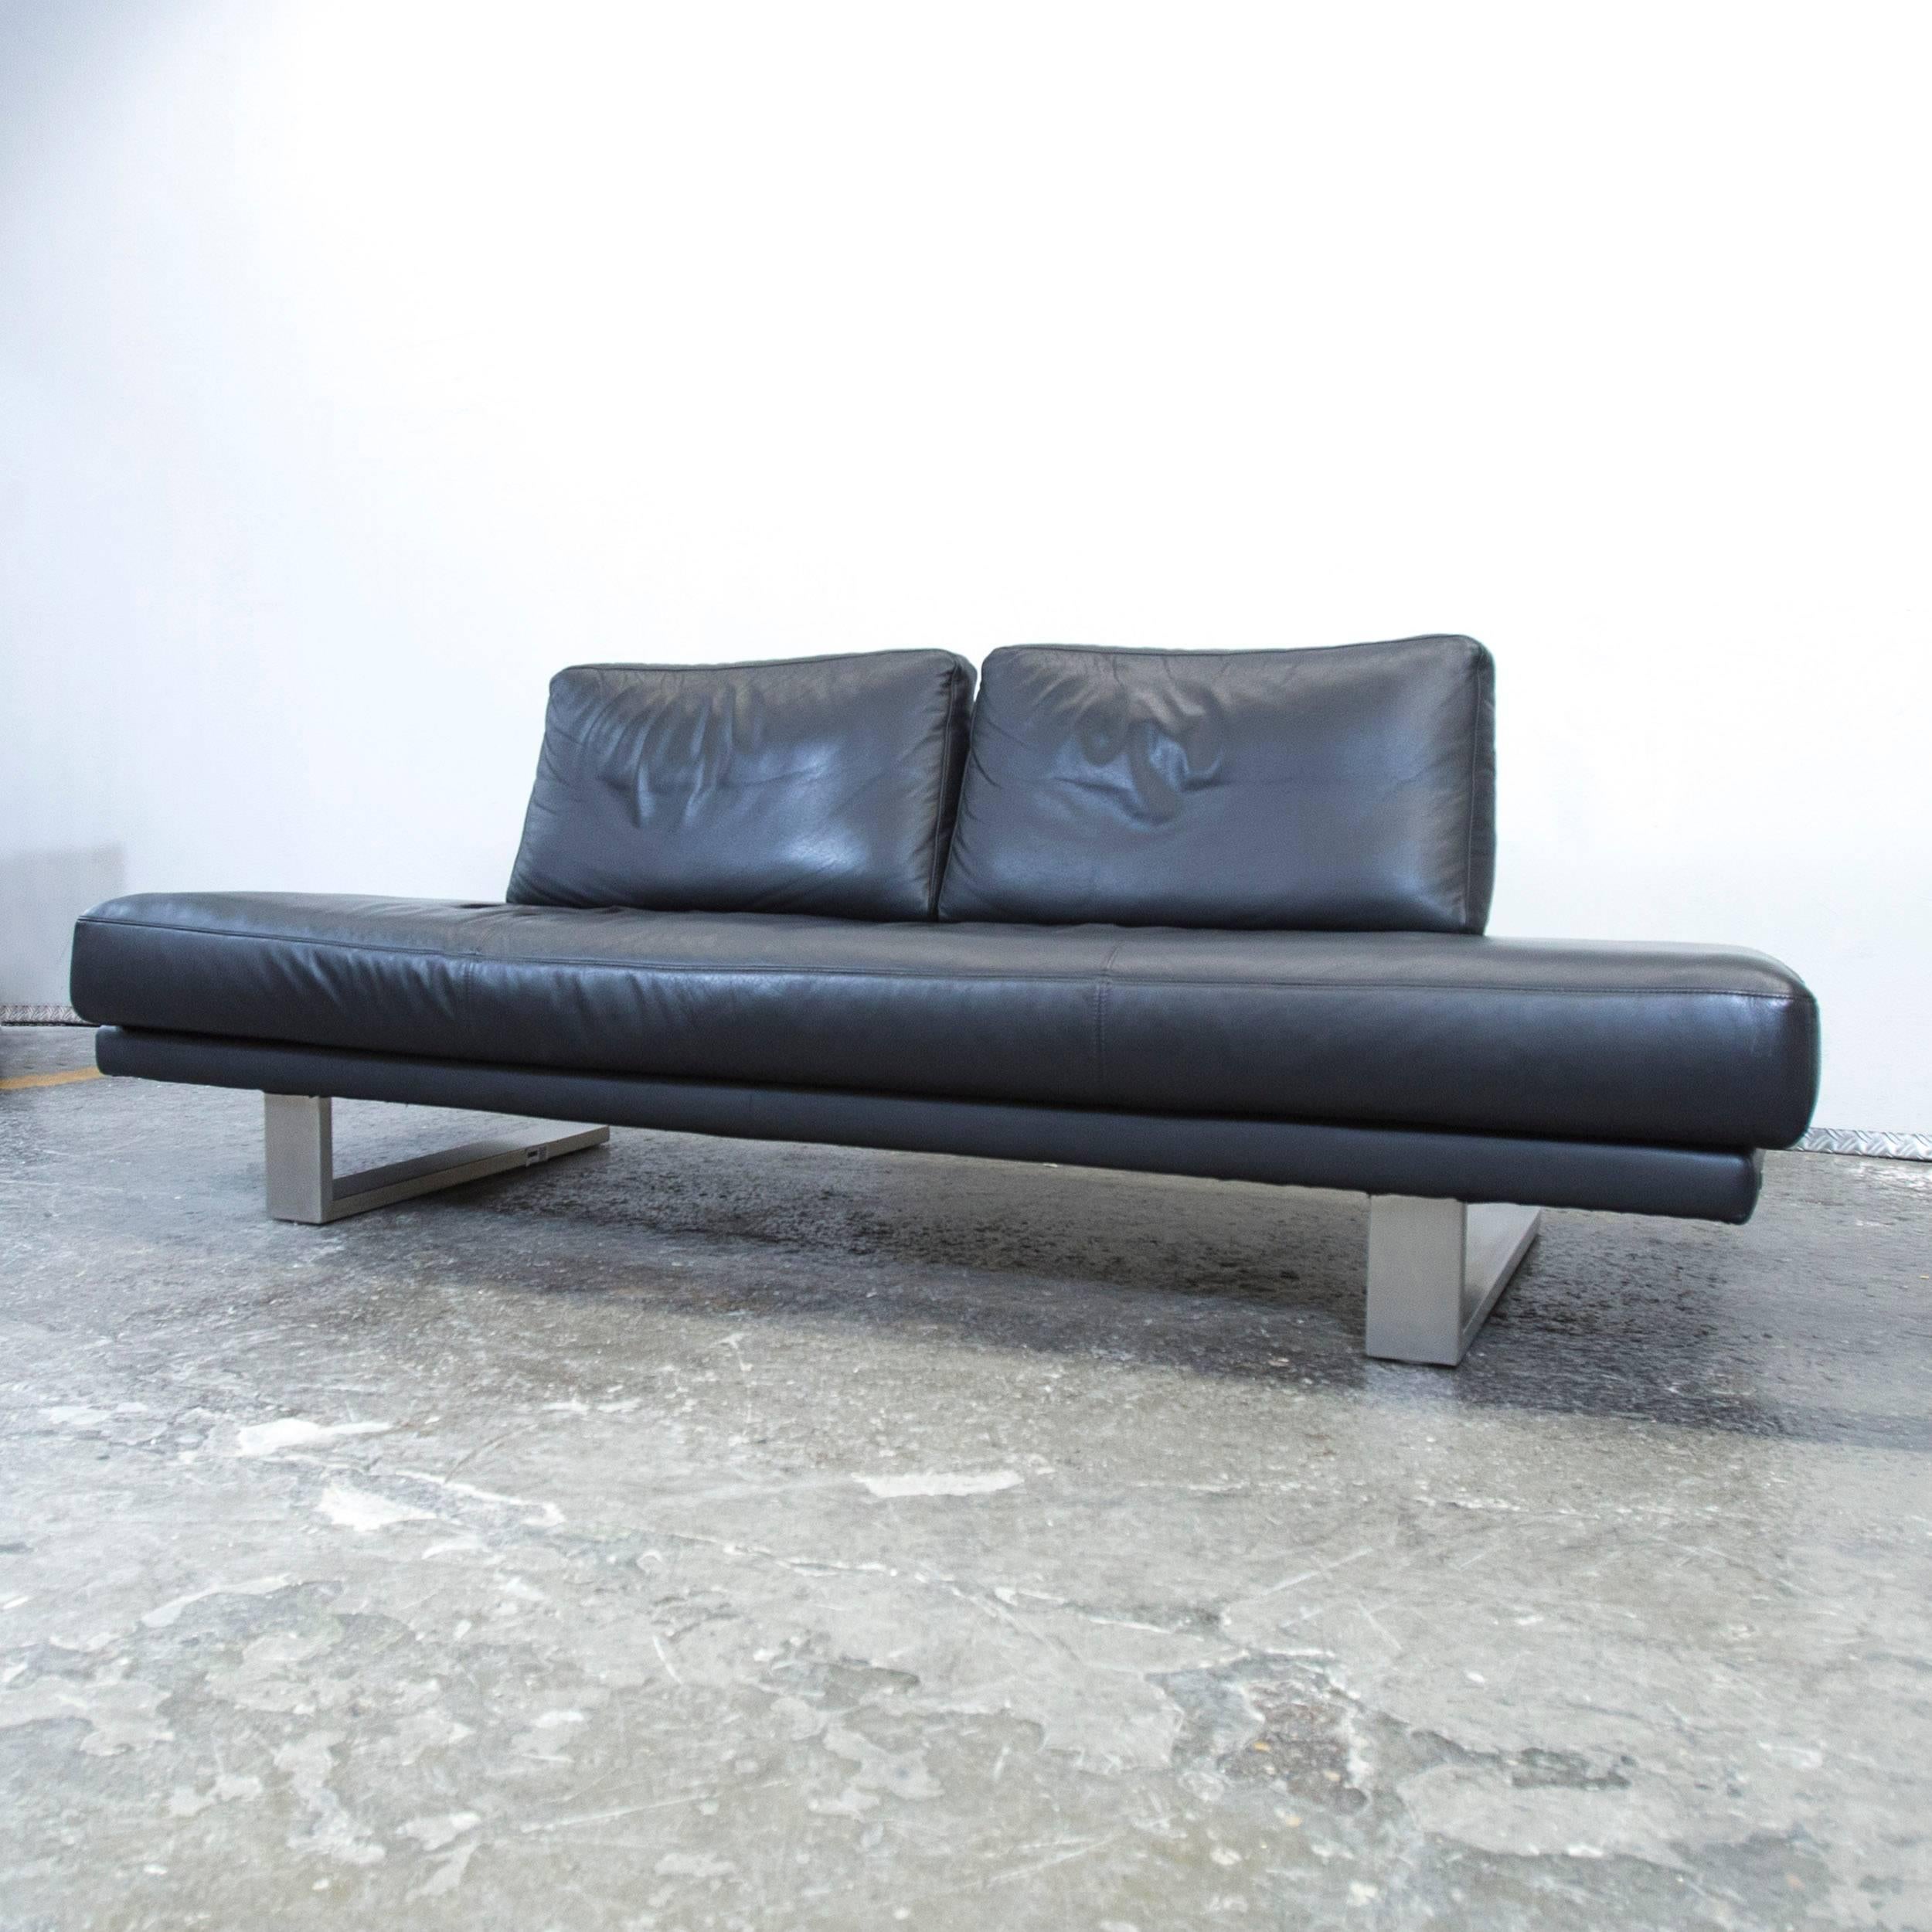 Black colored original Rolf Benz SOB 6600 designer leather sofa in a minimalistic and modern design, made for pure comfort.